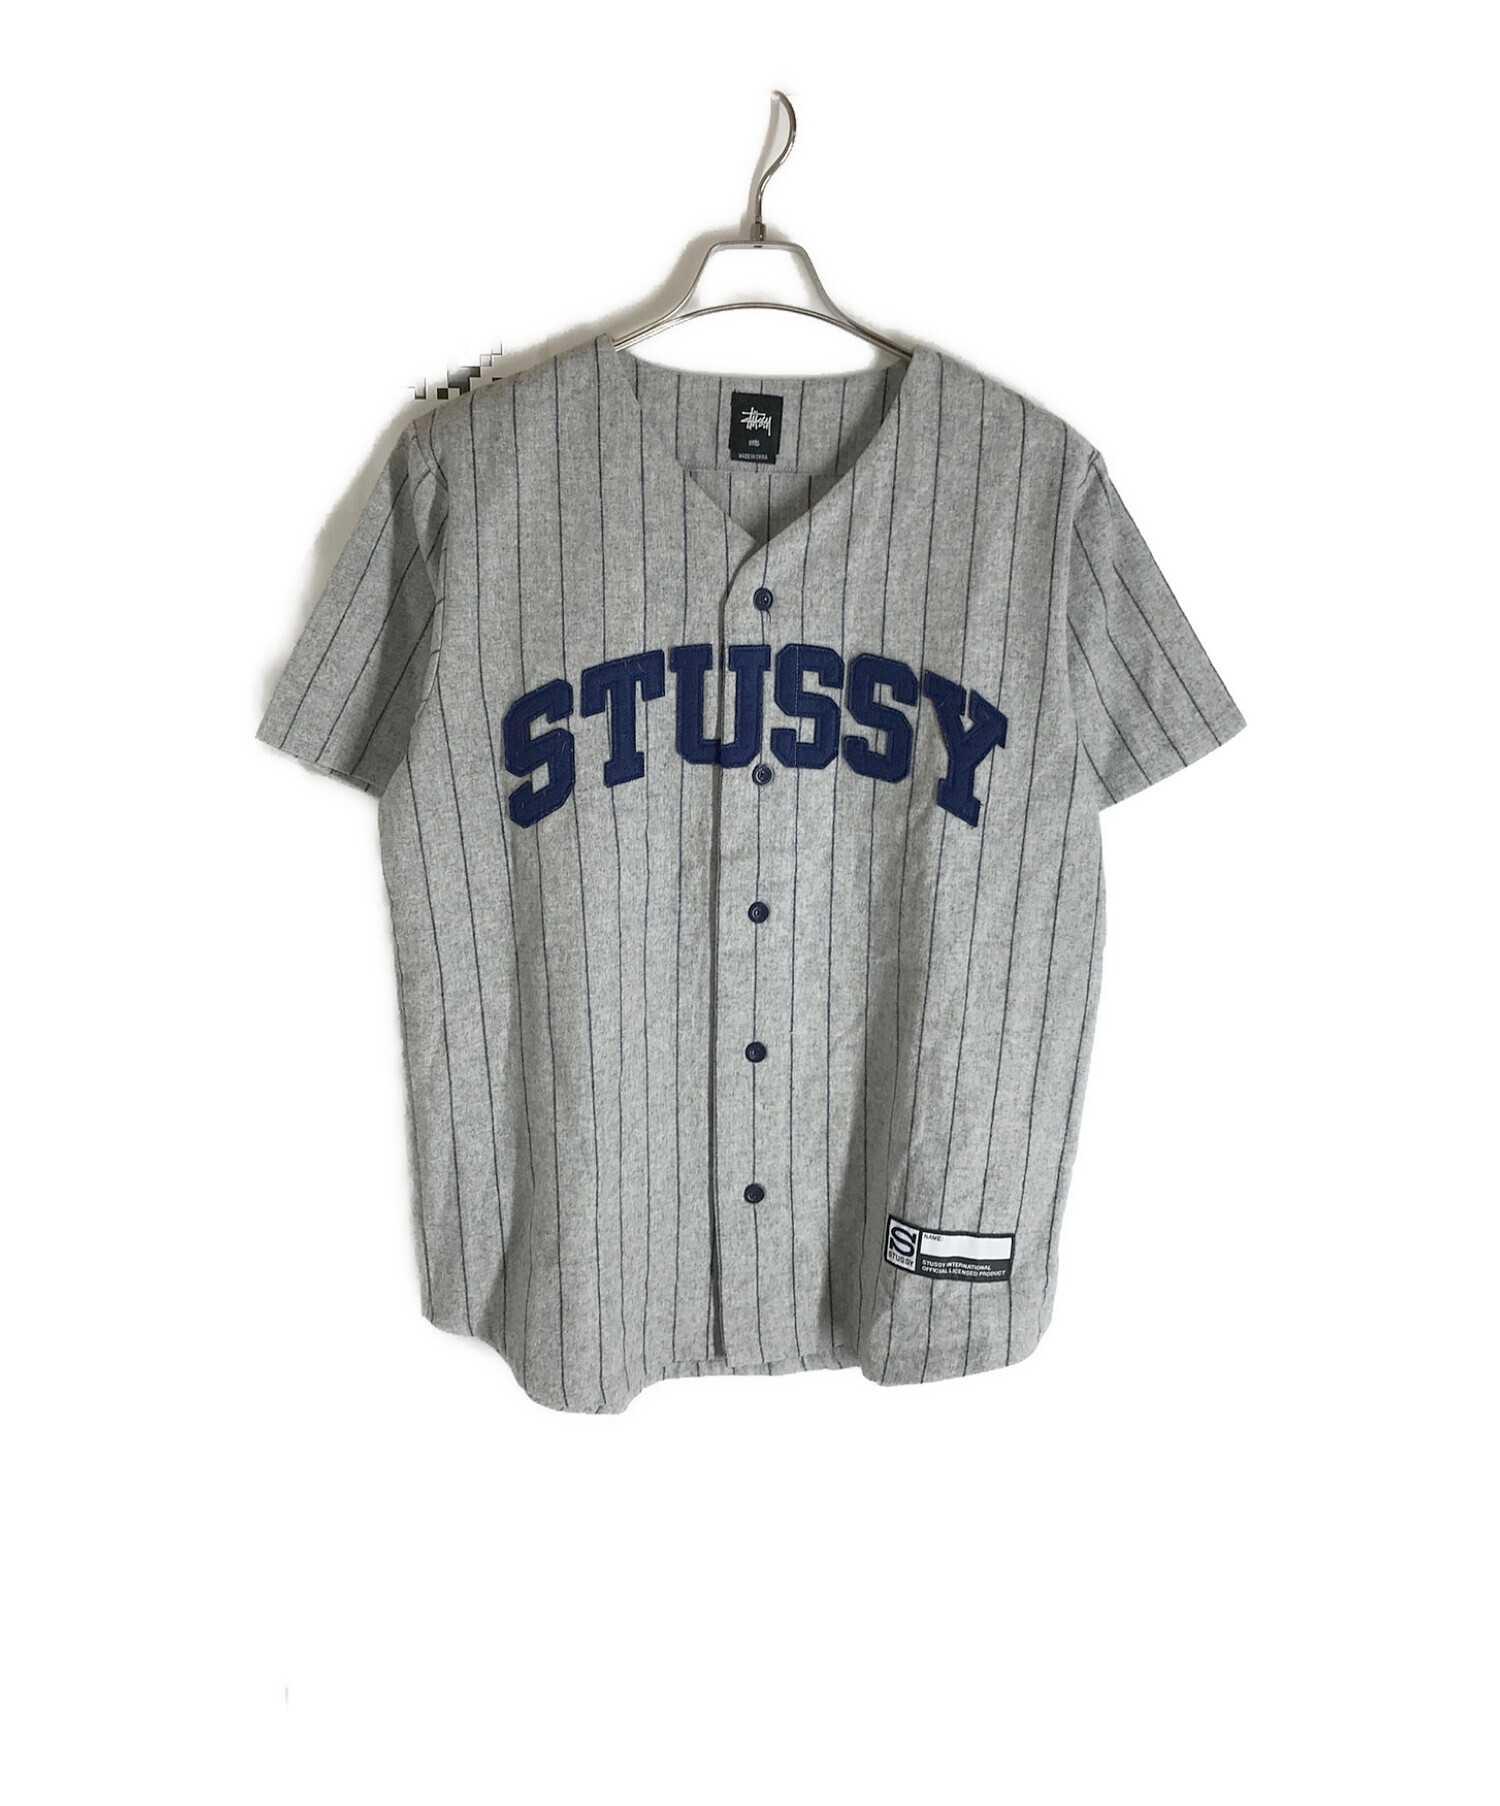 stussyベースボールユニフォームタイプ - Tシャツ/カットソー(半袖/袖なし)